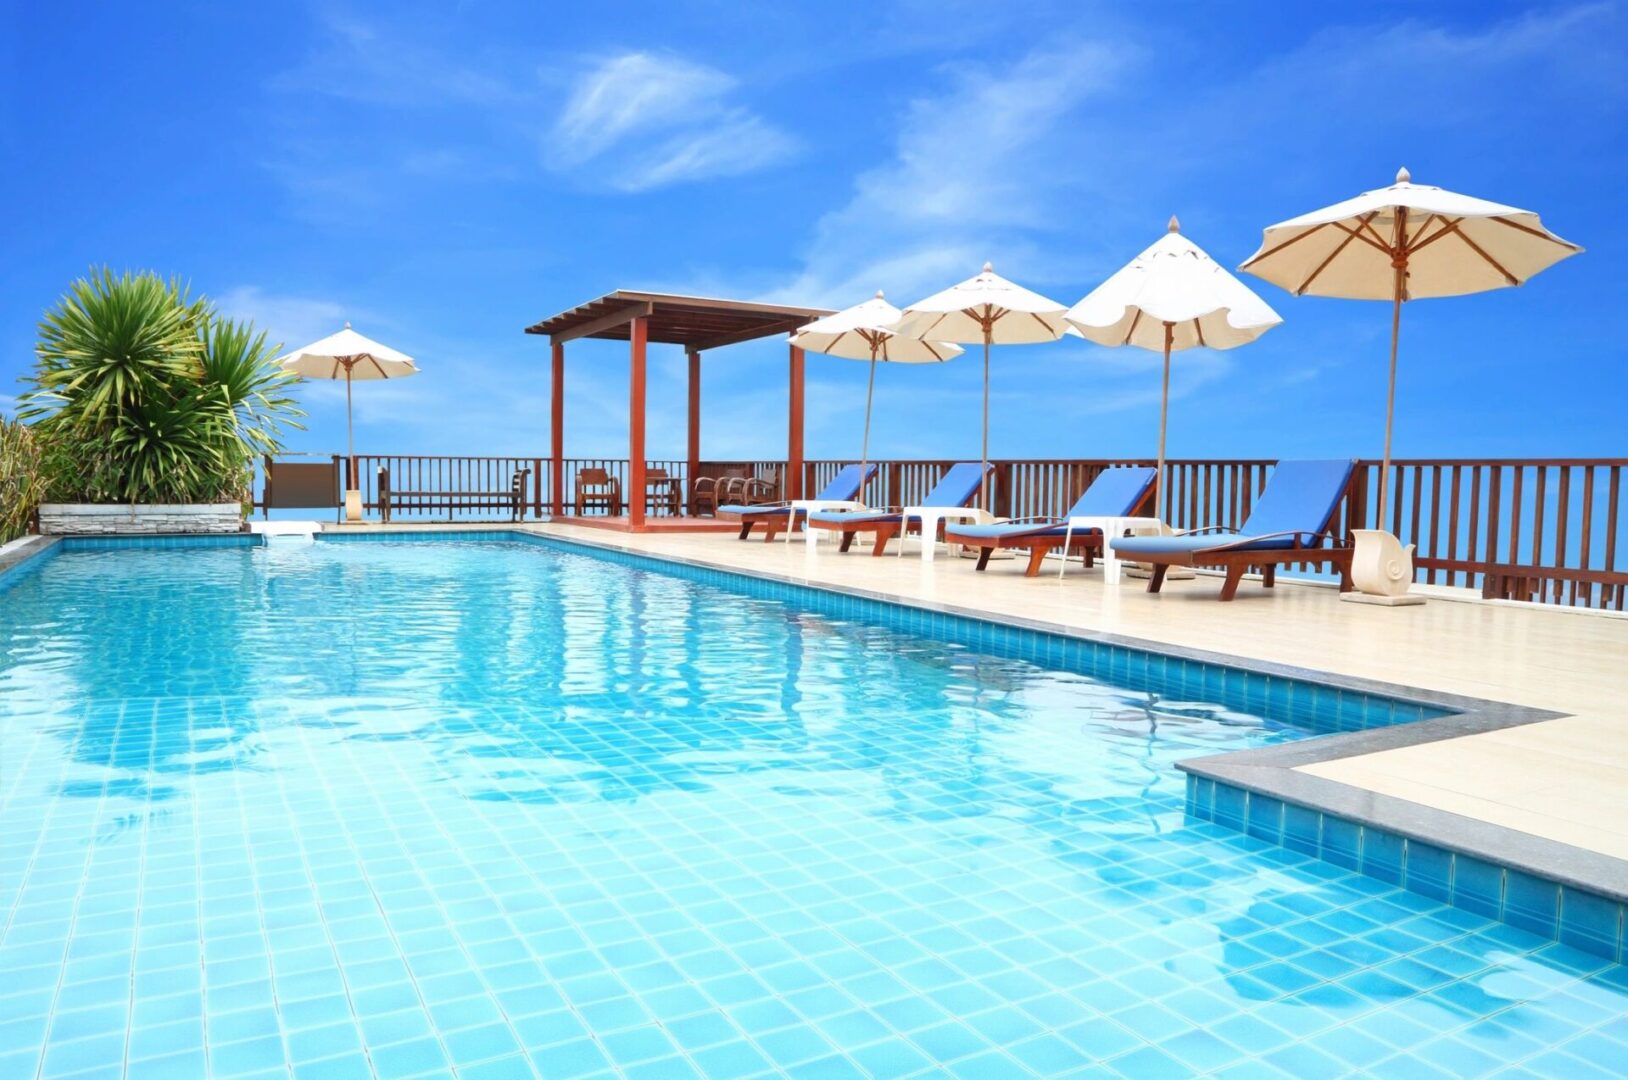 large pool at a resort